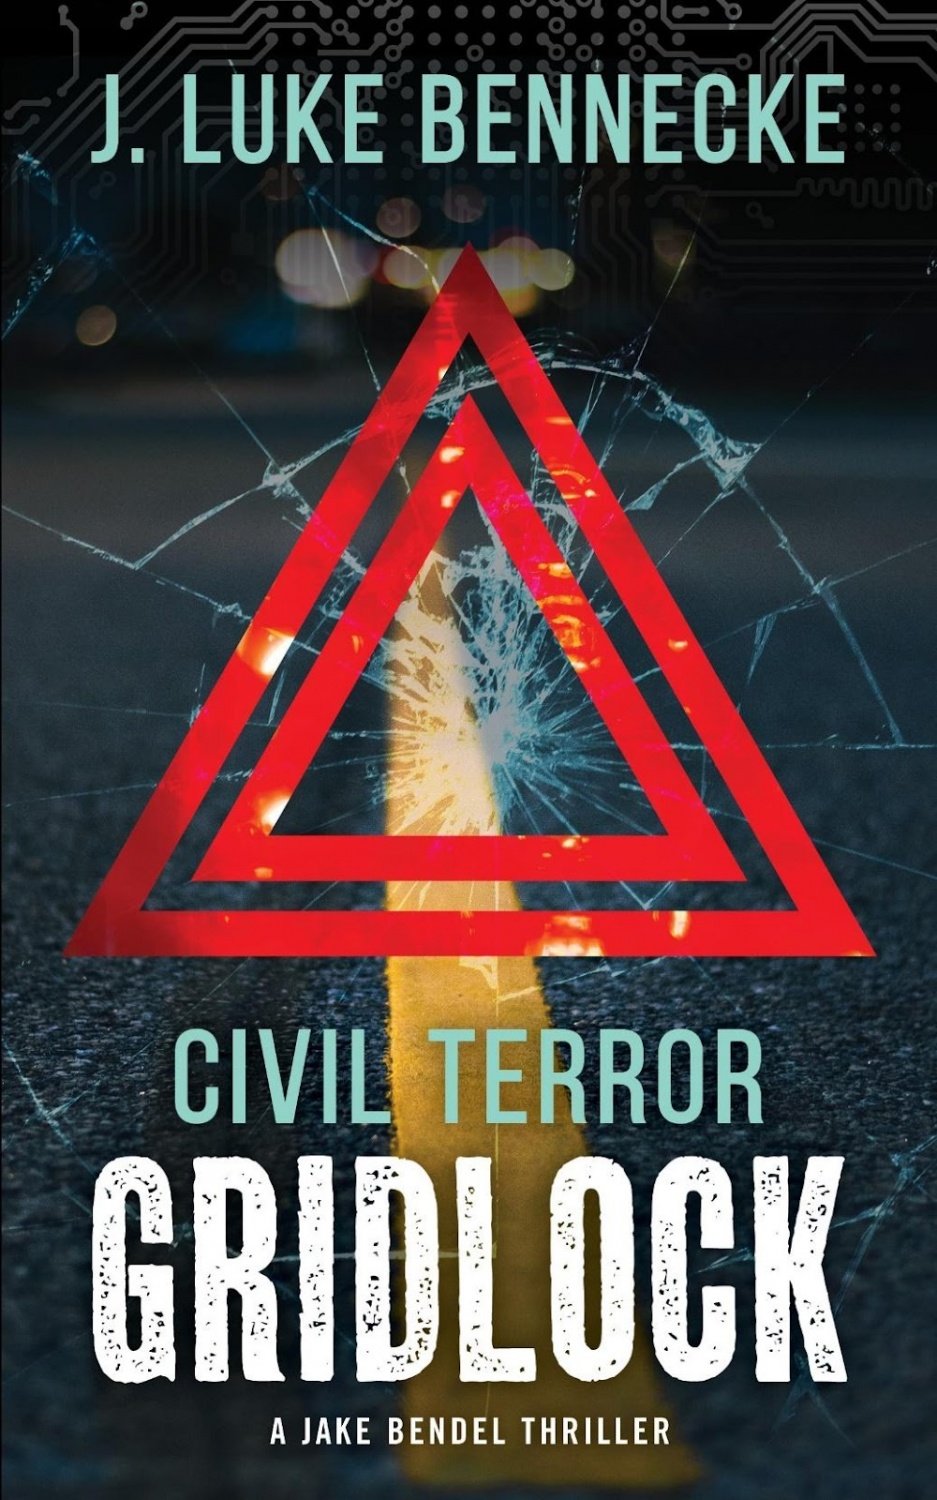 Jason Luke Bennecke’s Civil Terror: Gridlock